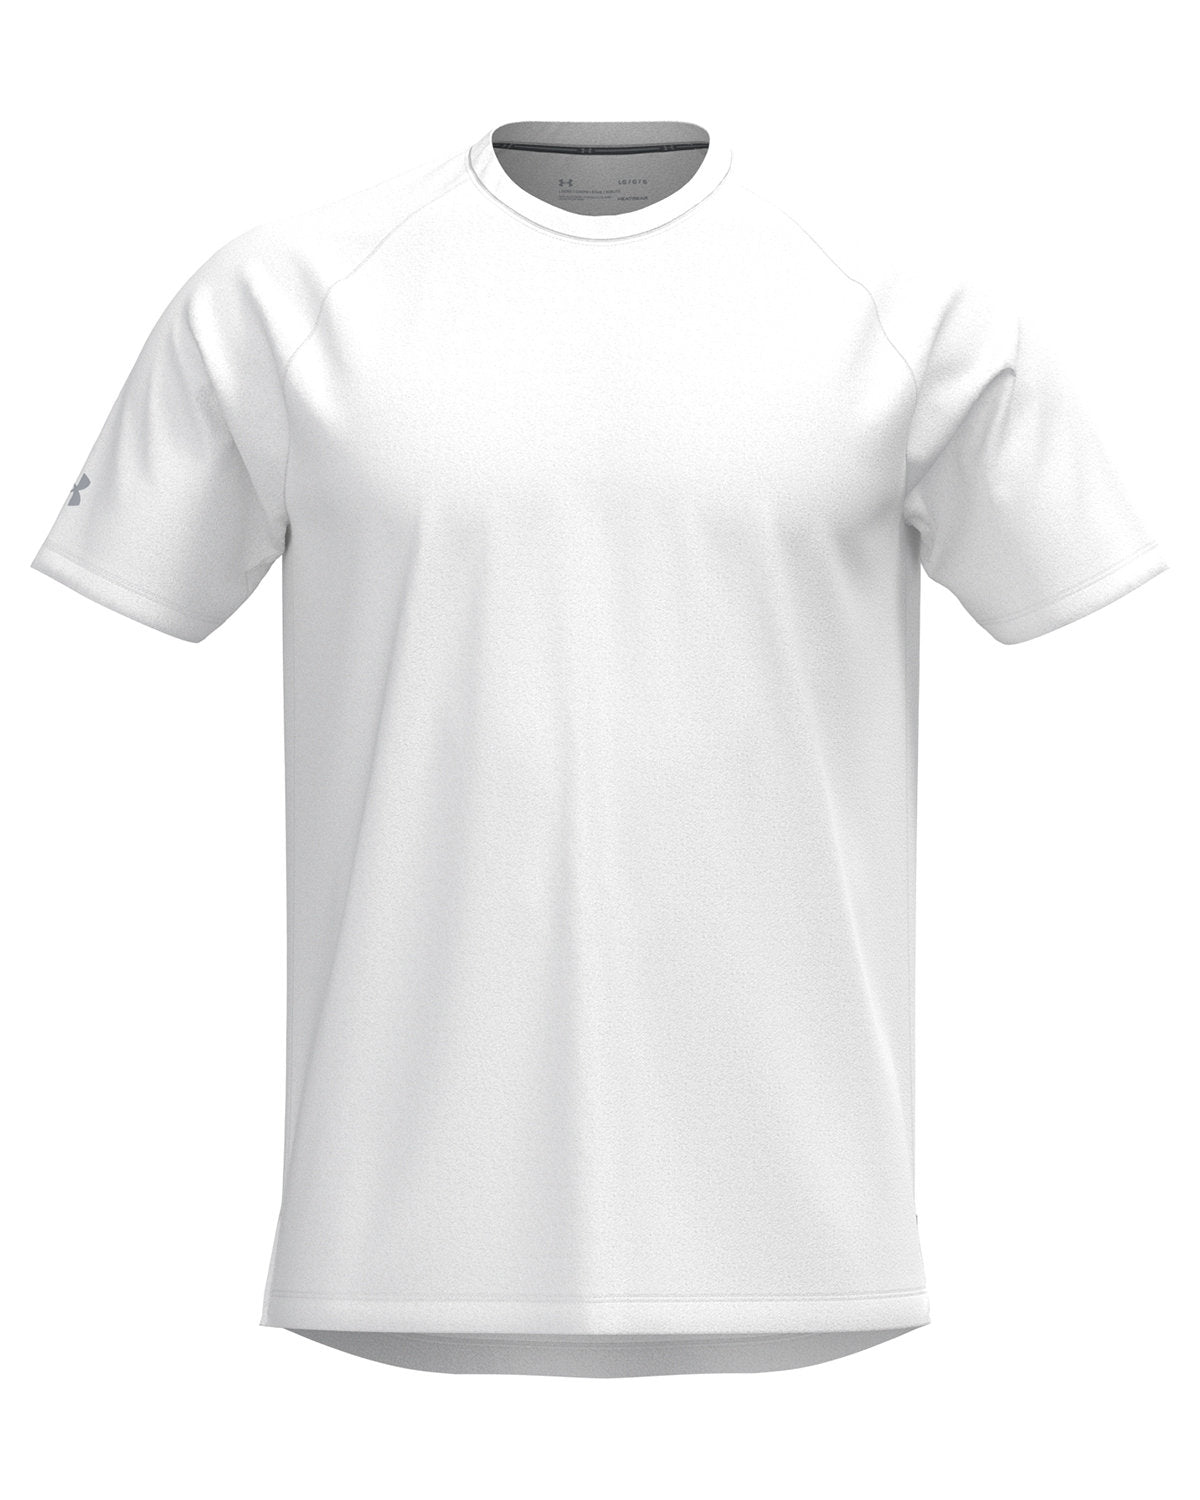 UNDER ARMOUR Men's Athletic 2.0 Raglan T-Shirt